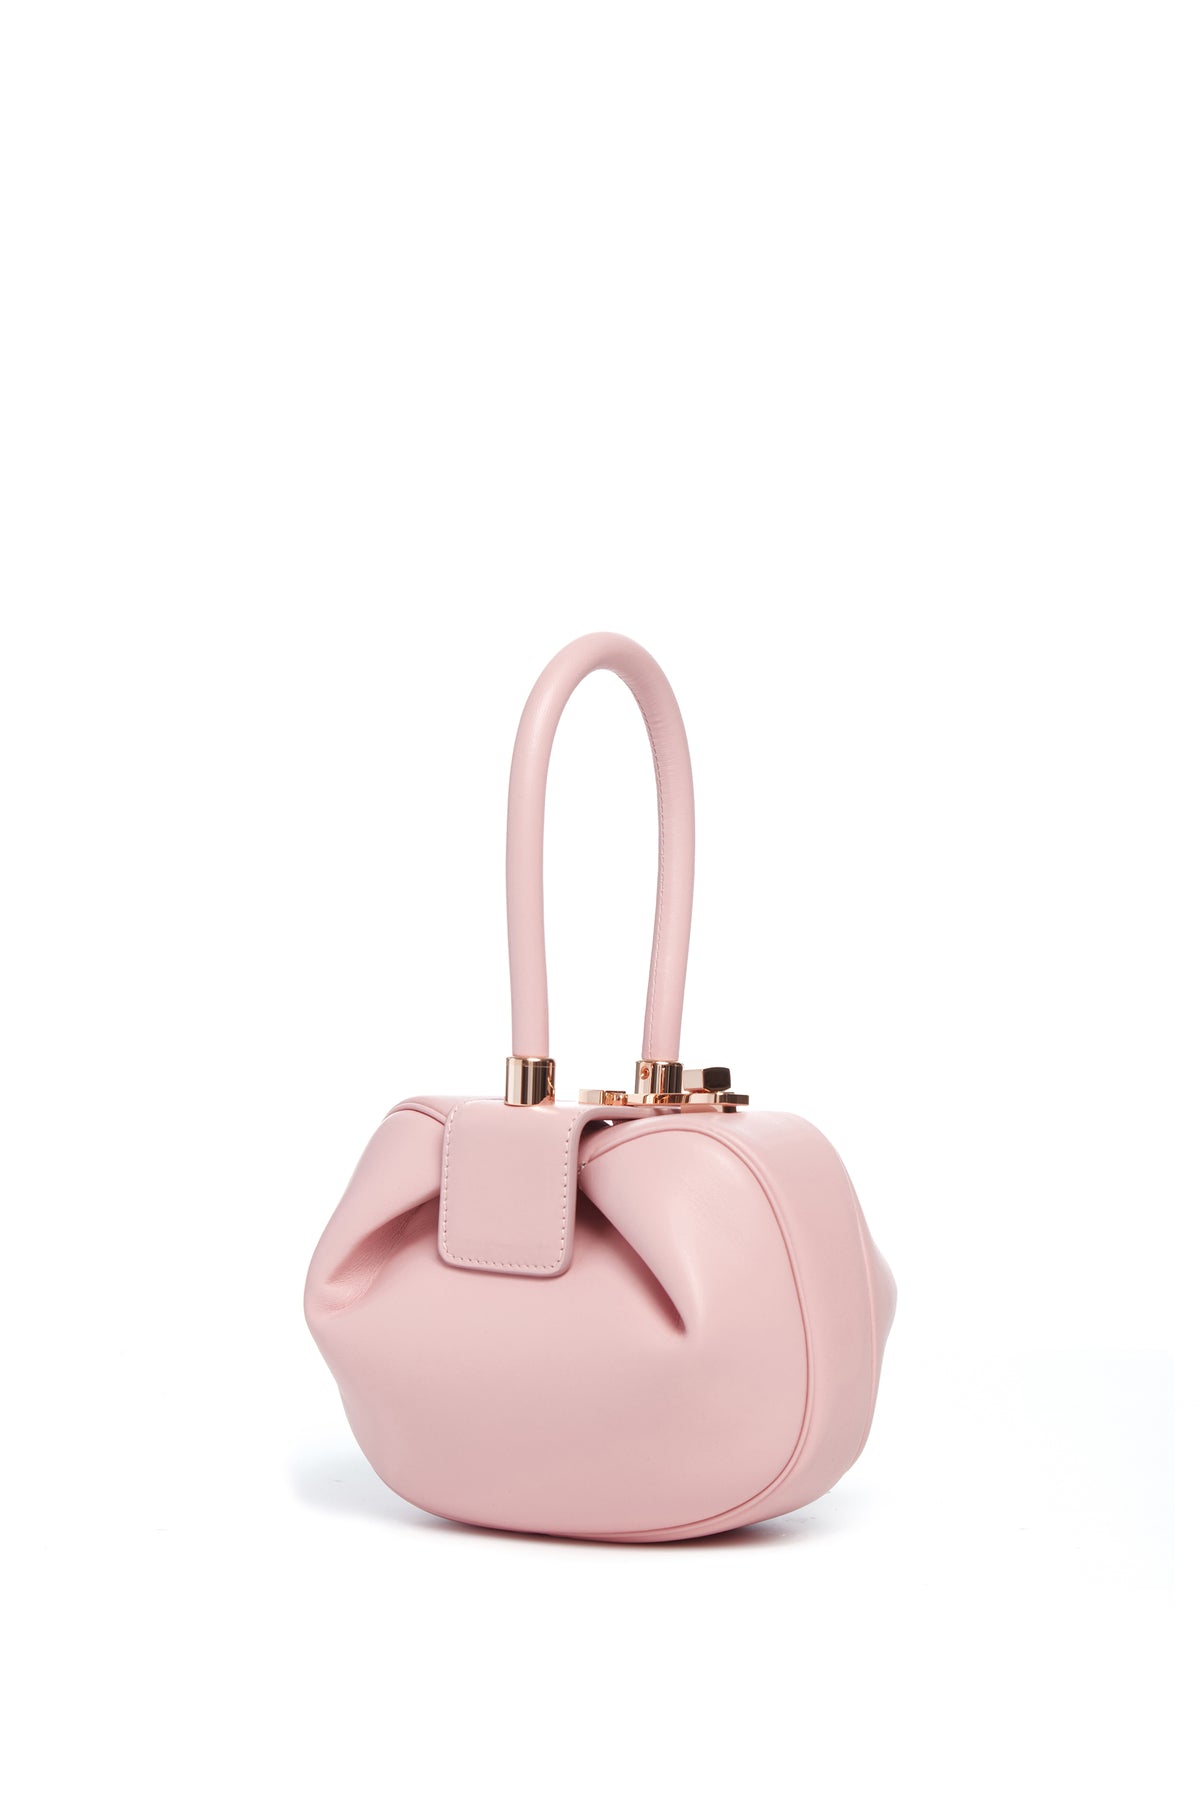 Gabriela Hearst - Demi Bag in Pink Satin with Custom Made